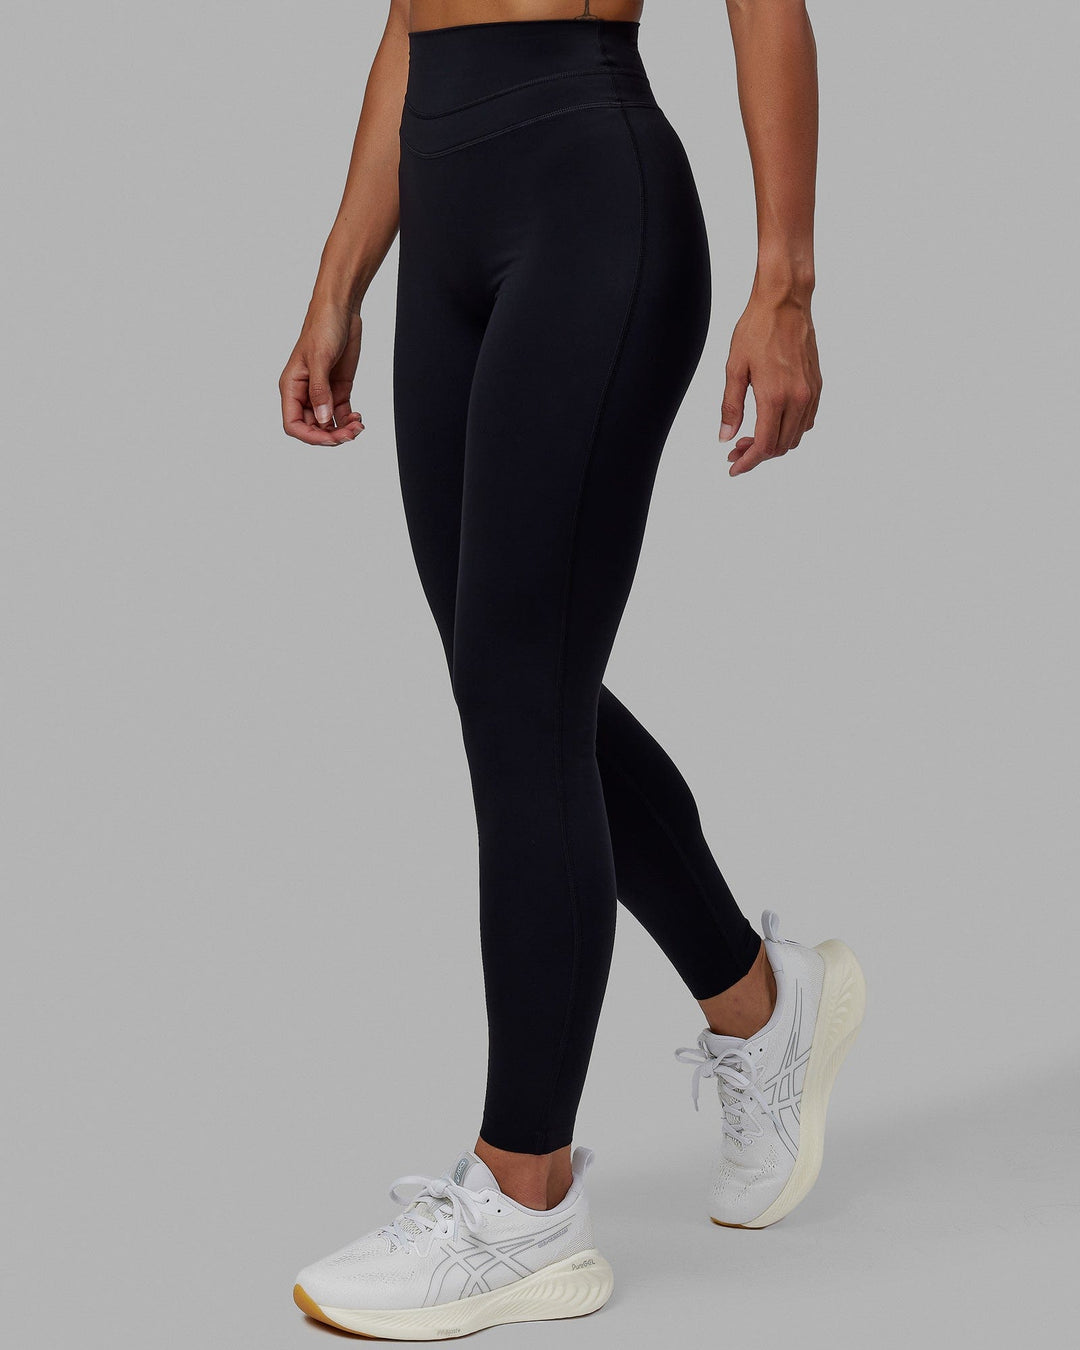 Woman wearing Enhance Full Length Tights - Black